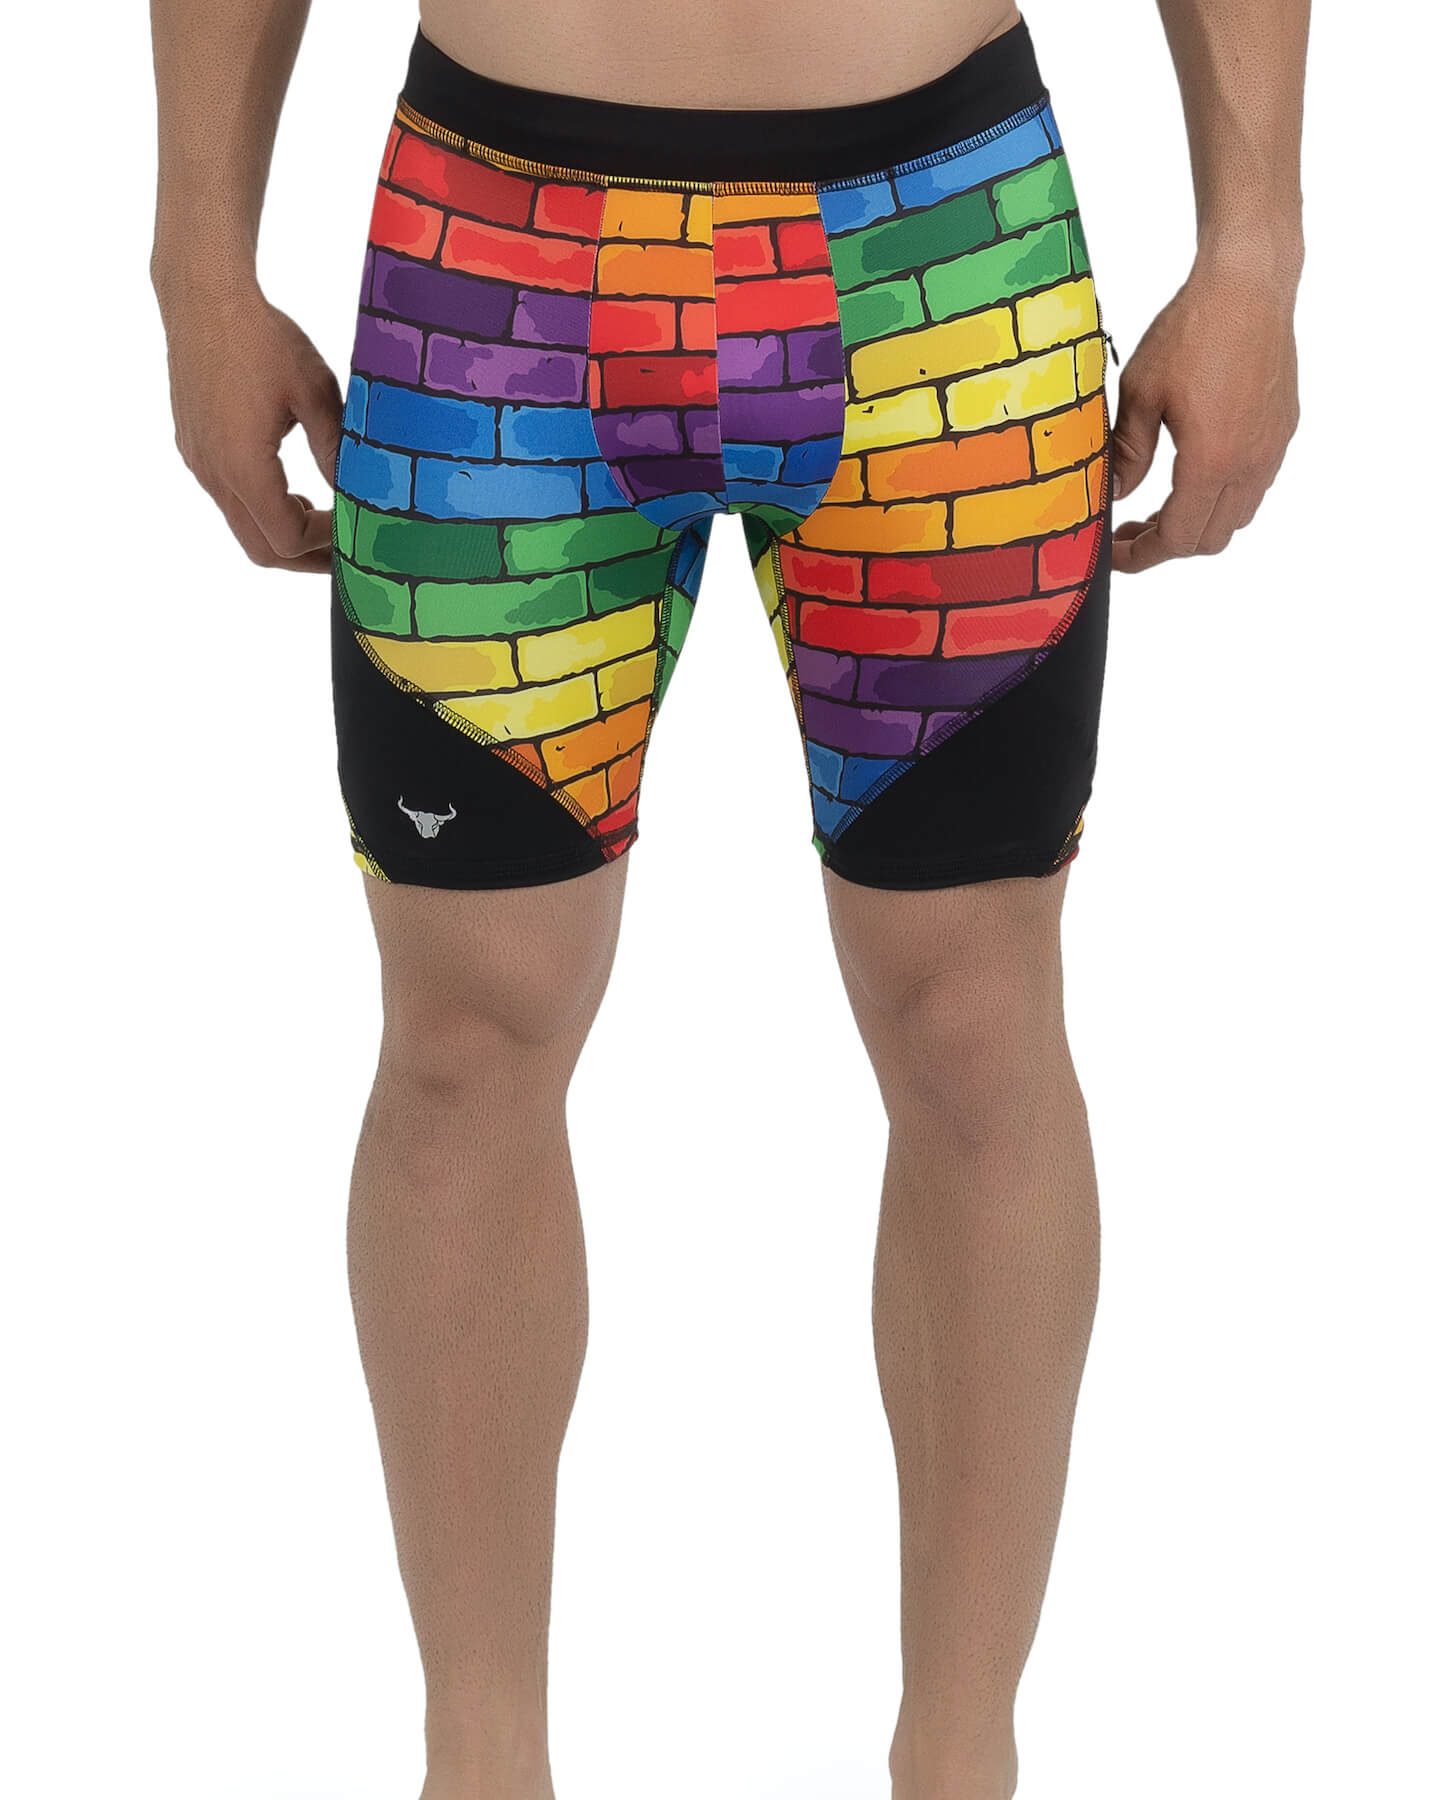 LZLRUN Rainbow Reflective Shorts Pants Men Fluorescent Trousers